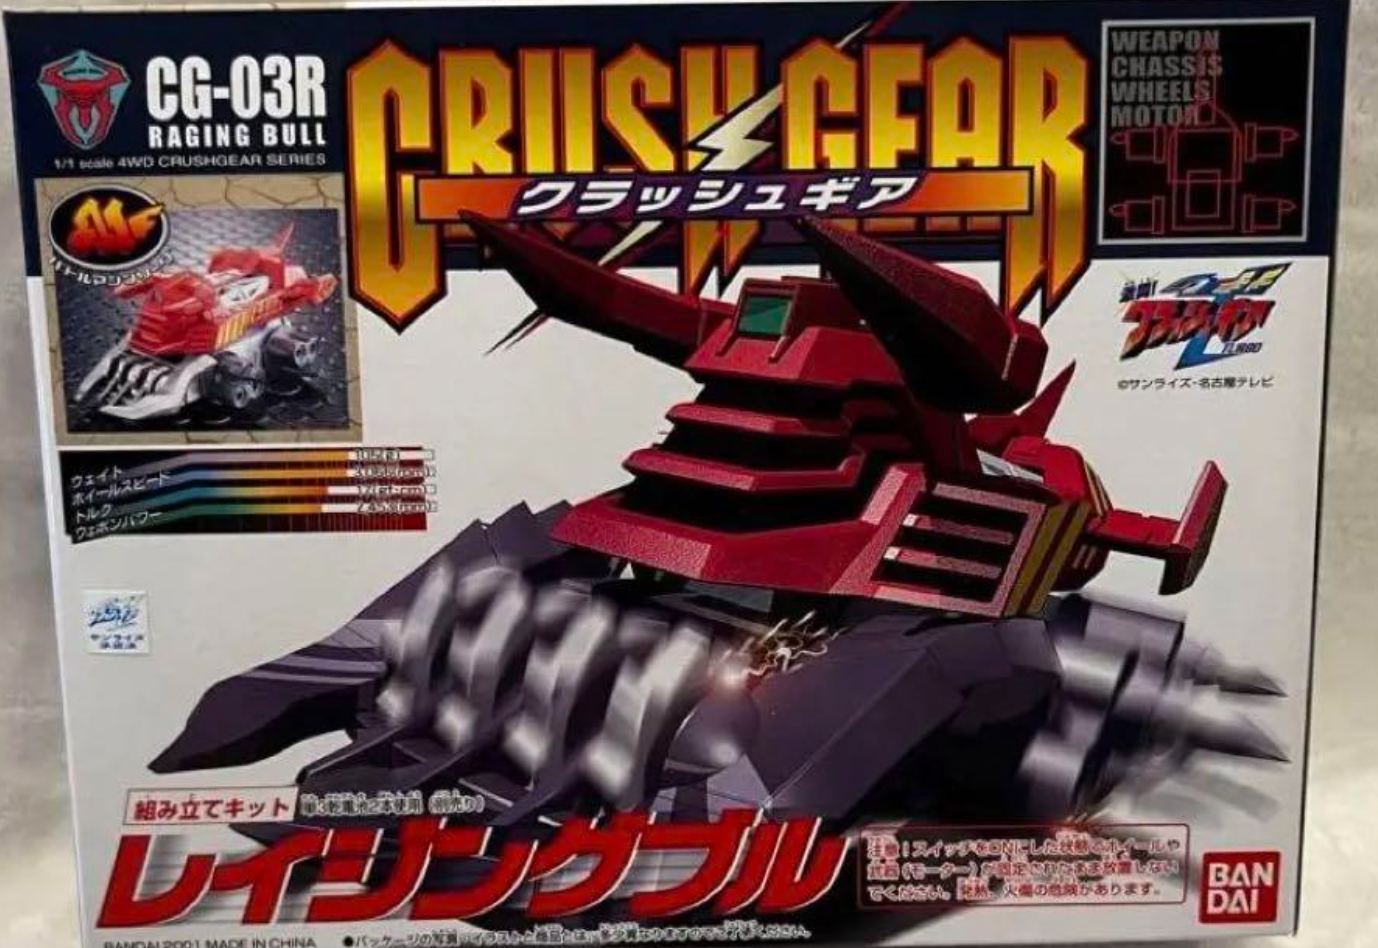 Bandai 1/1 Crush Gear 4WD CG-03R Raging Bull Model Kit Figure